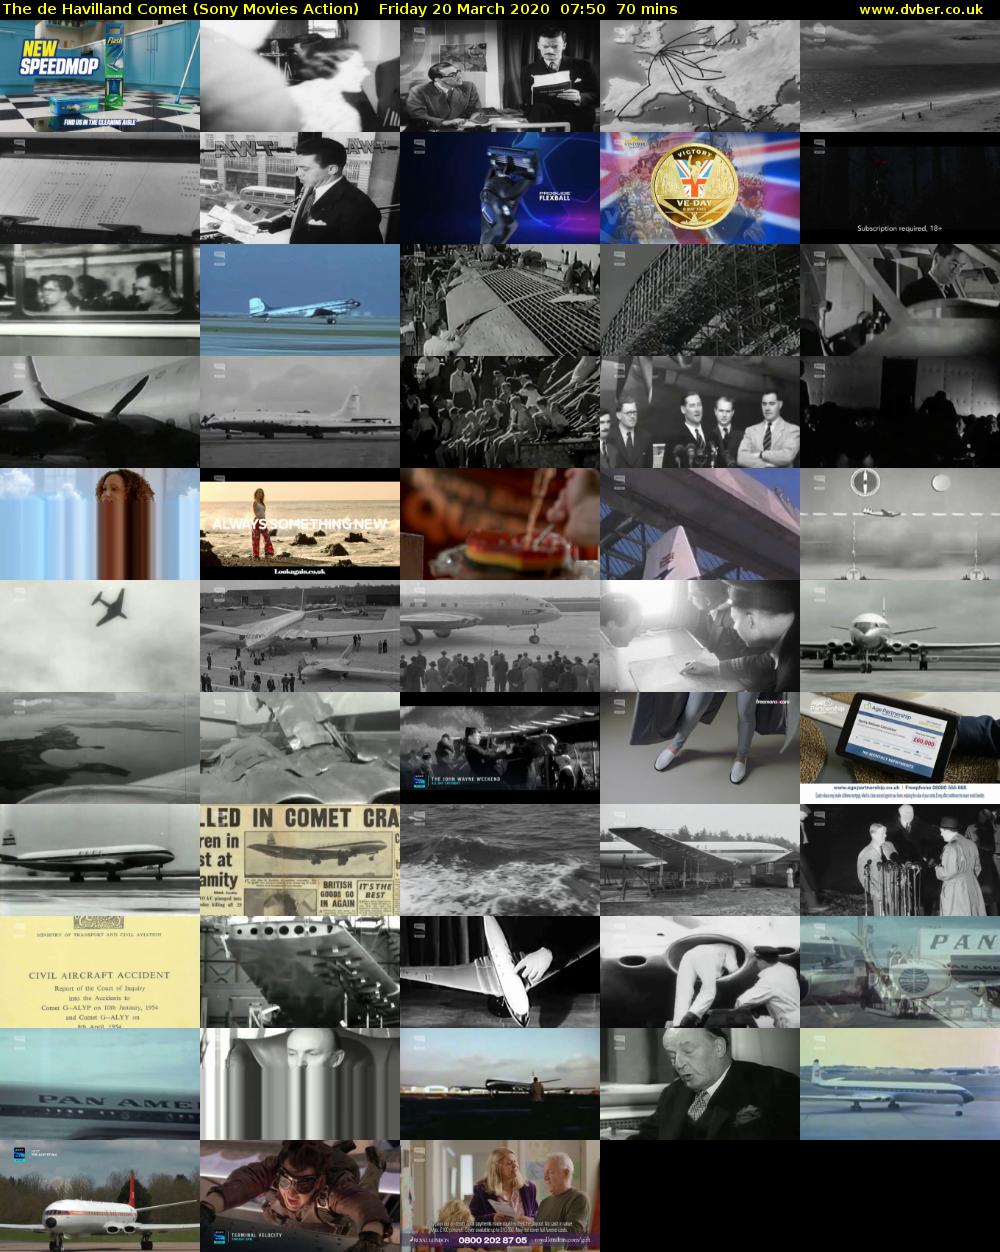 The de Havilland Comet (Sony Movies Action) Friday 20 March 2020 07:50 - 09:00